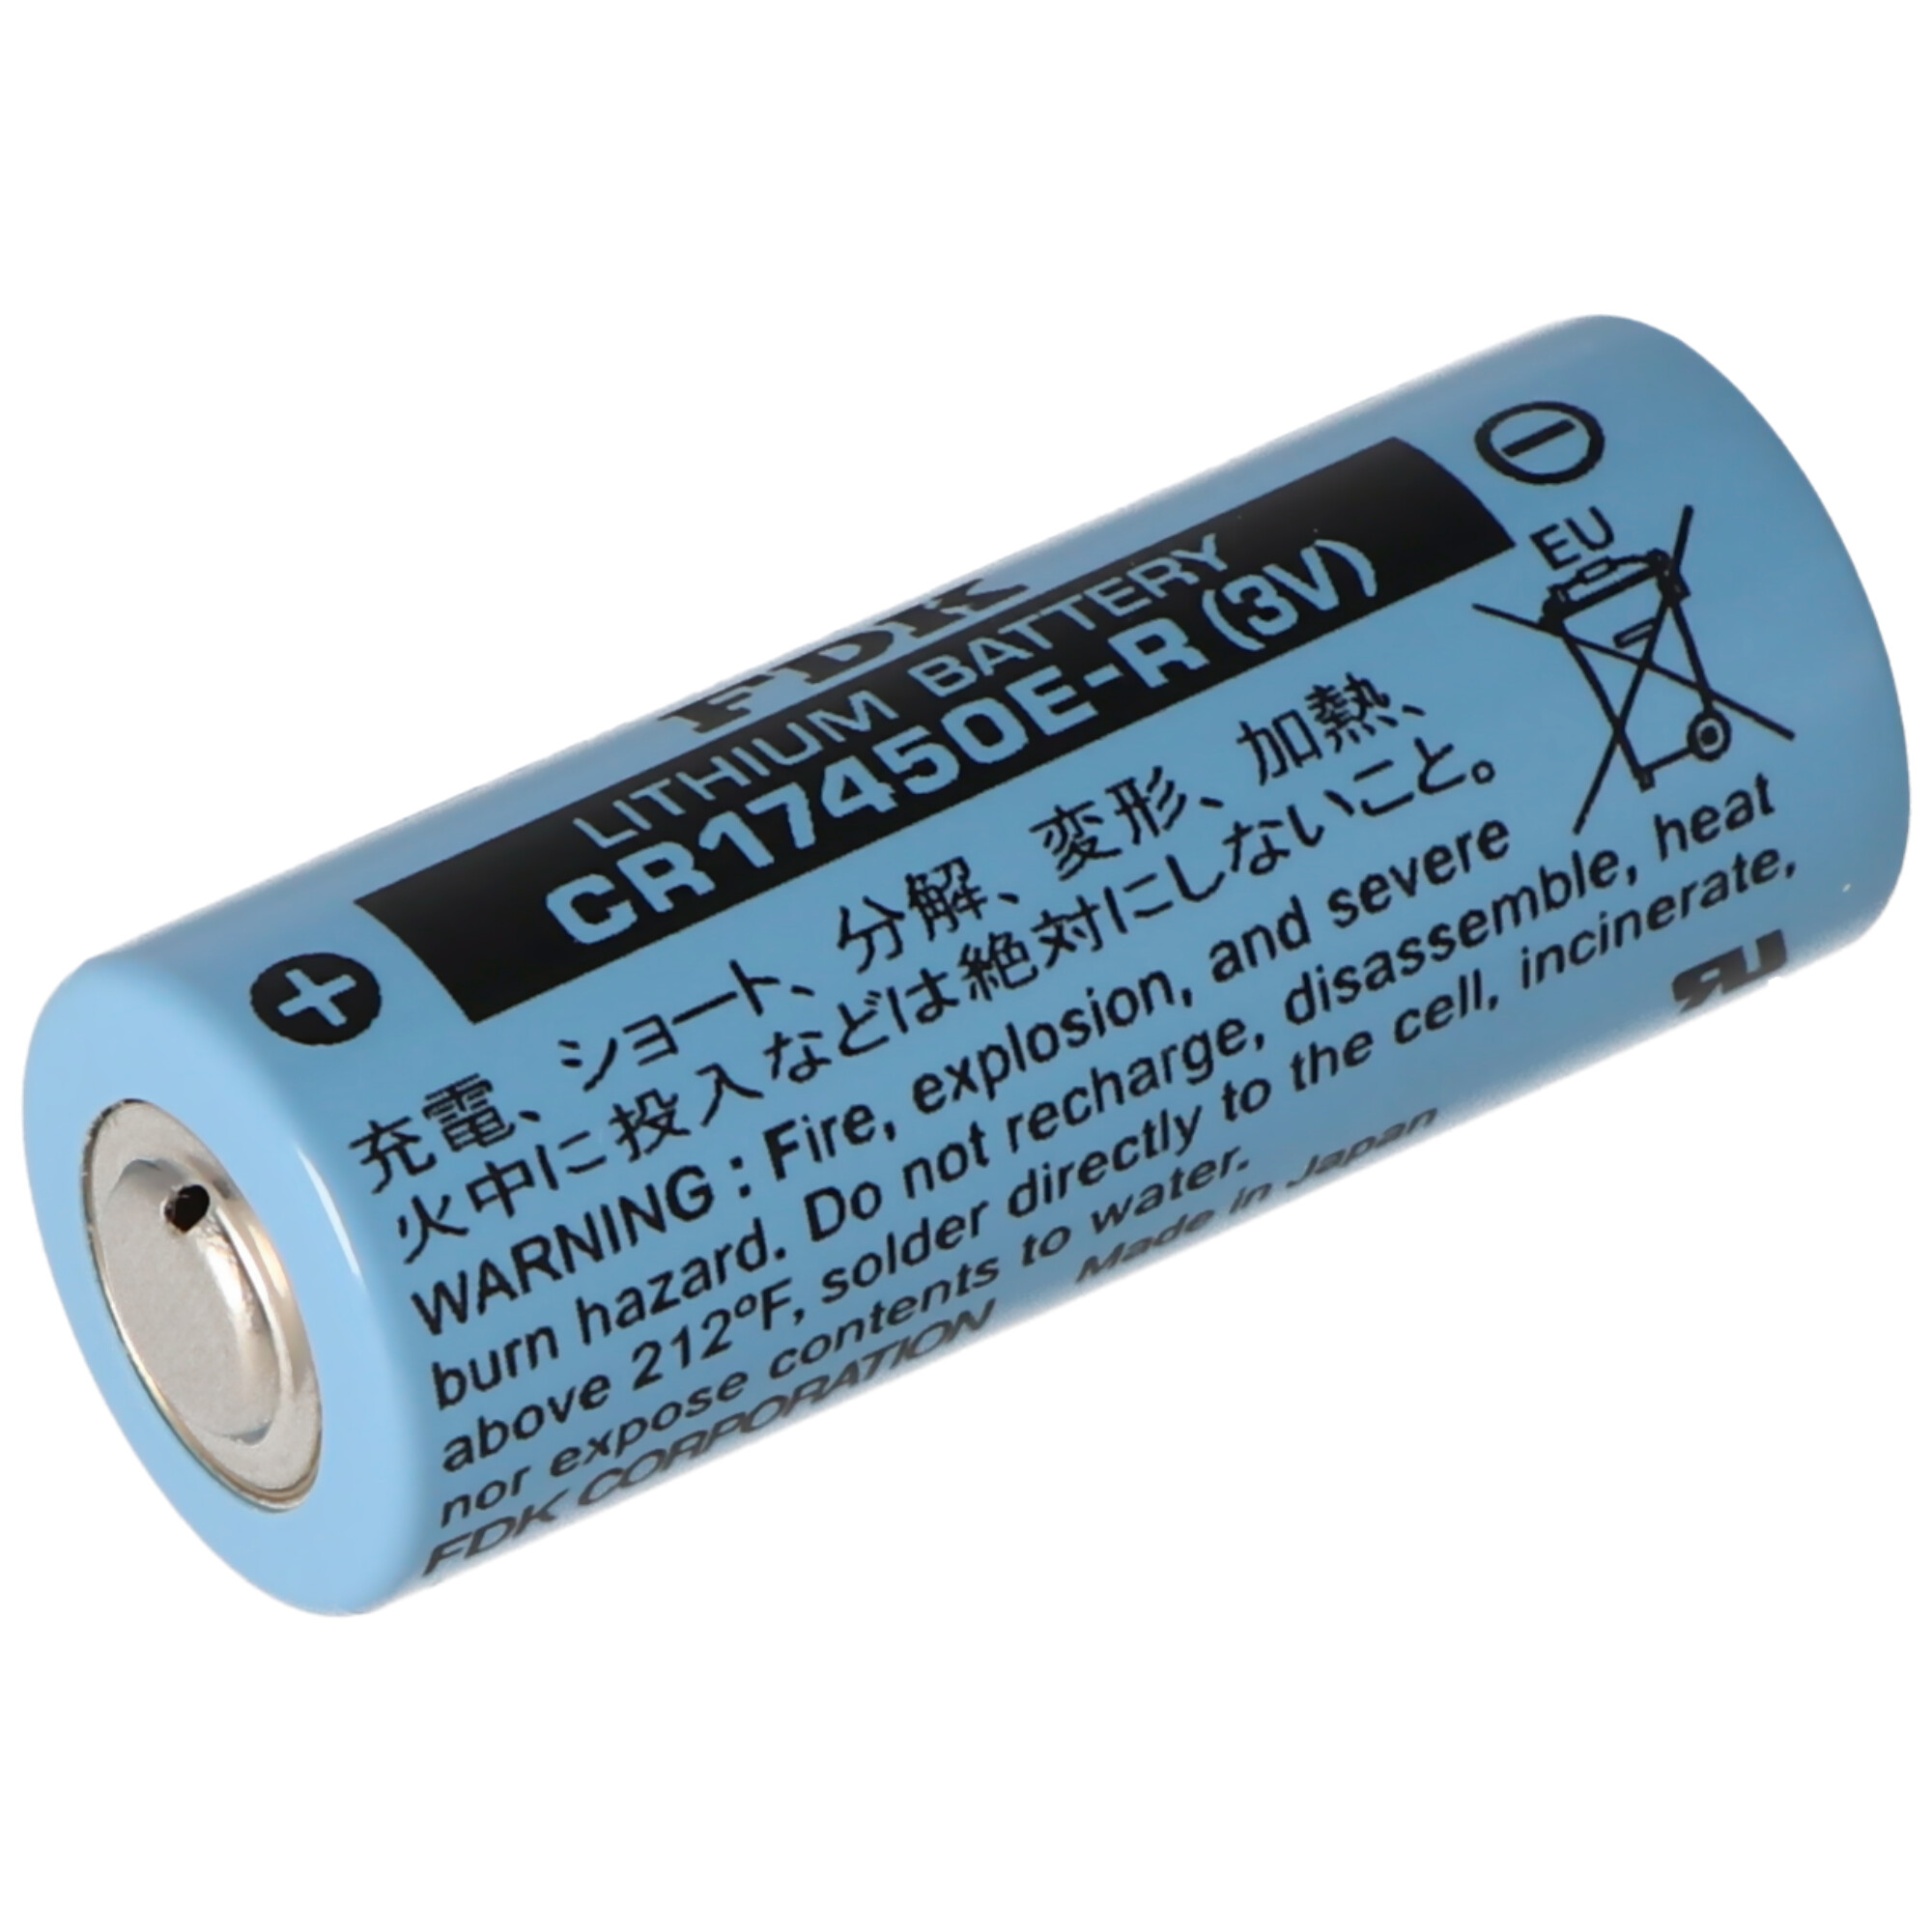 Sanyo Lithium Batterie CR17450E-R Size A Standard ohne Lötfahne